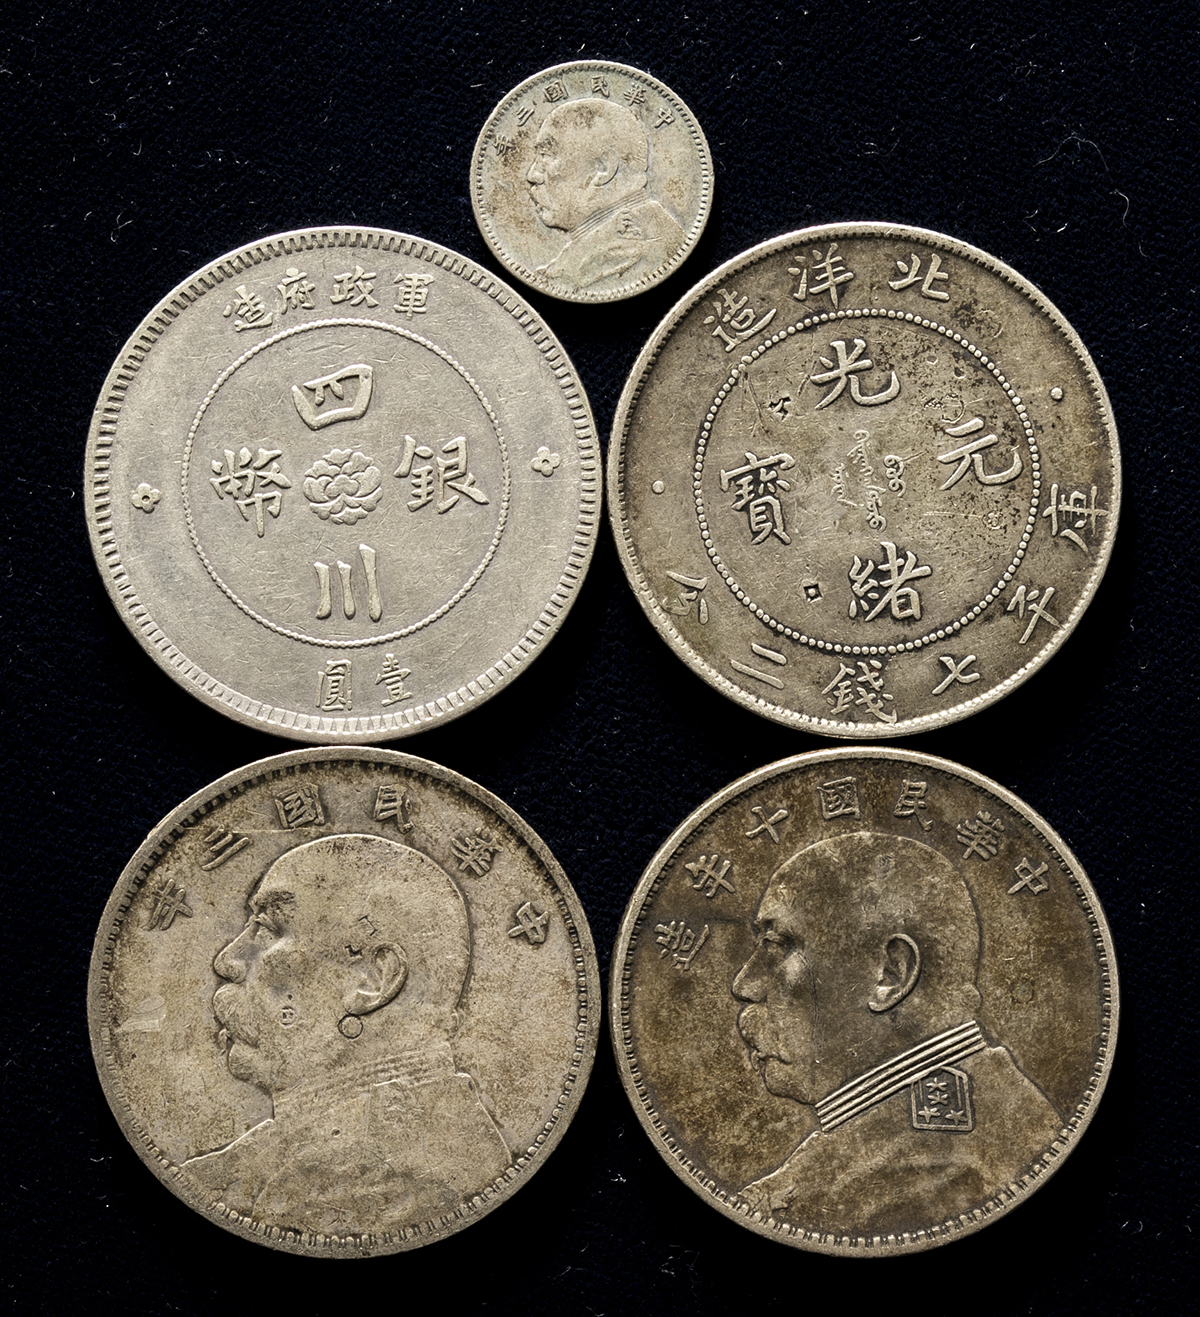 钱币博物馆| Lot of Modern Chinese coins 中国近代ロット四川銀幣壹圓 